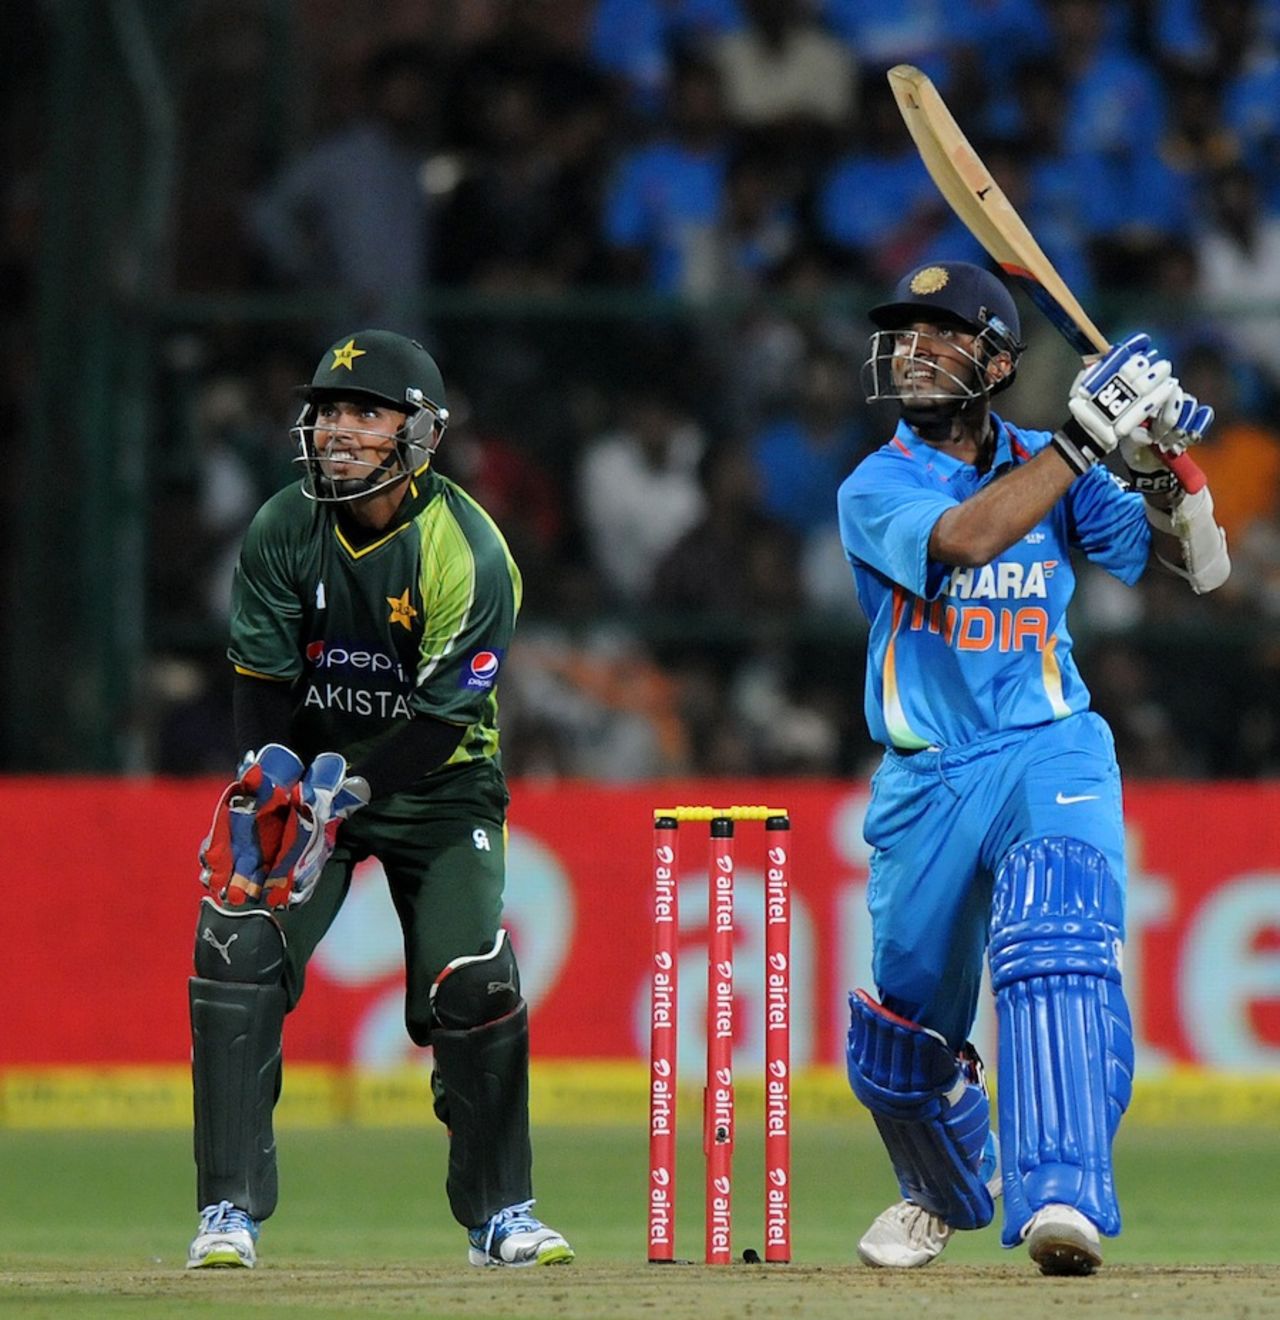 Ajinkya Rahane times one over extra-cover, India v Pakistan, 1st T20, Bangalore, December 25, 2012